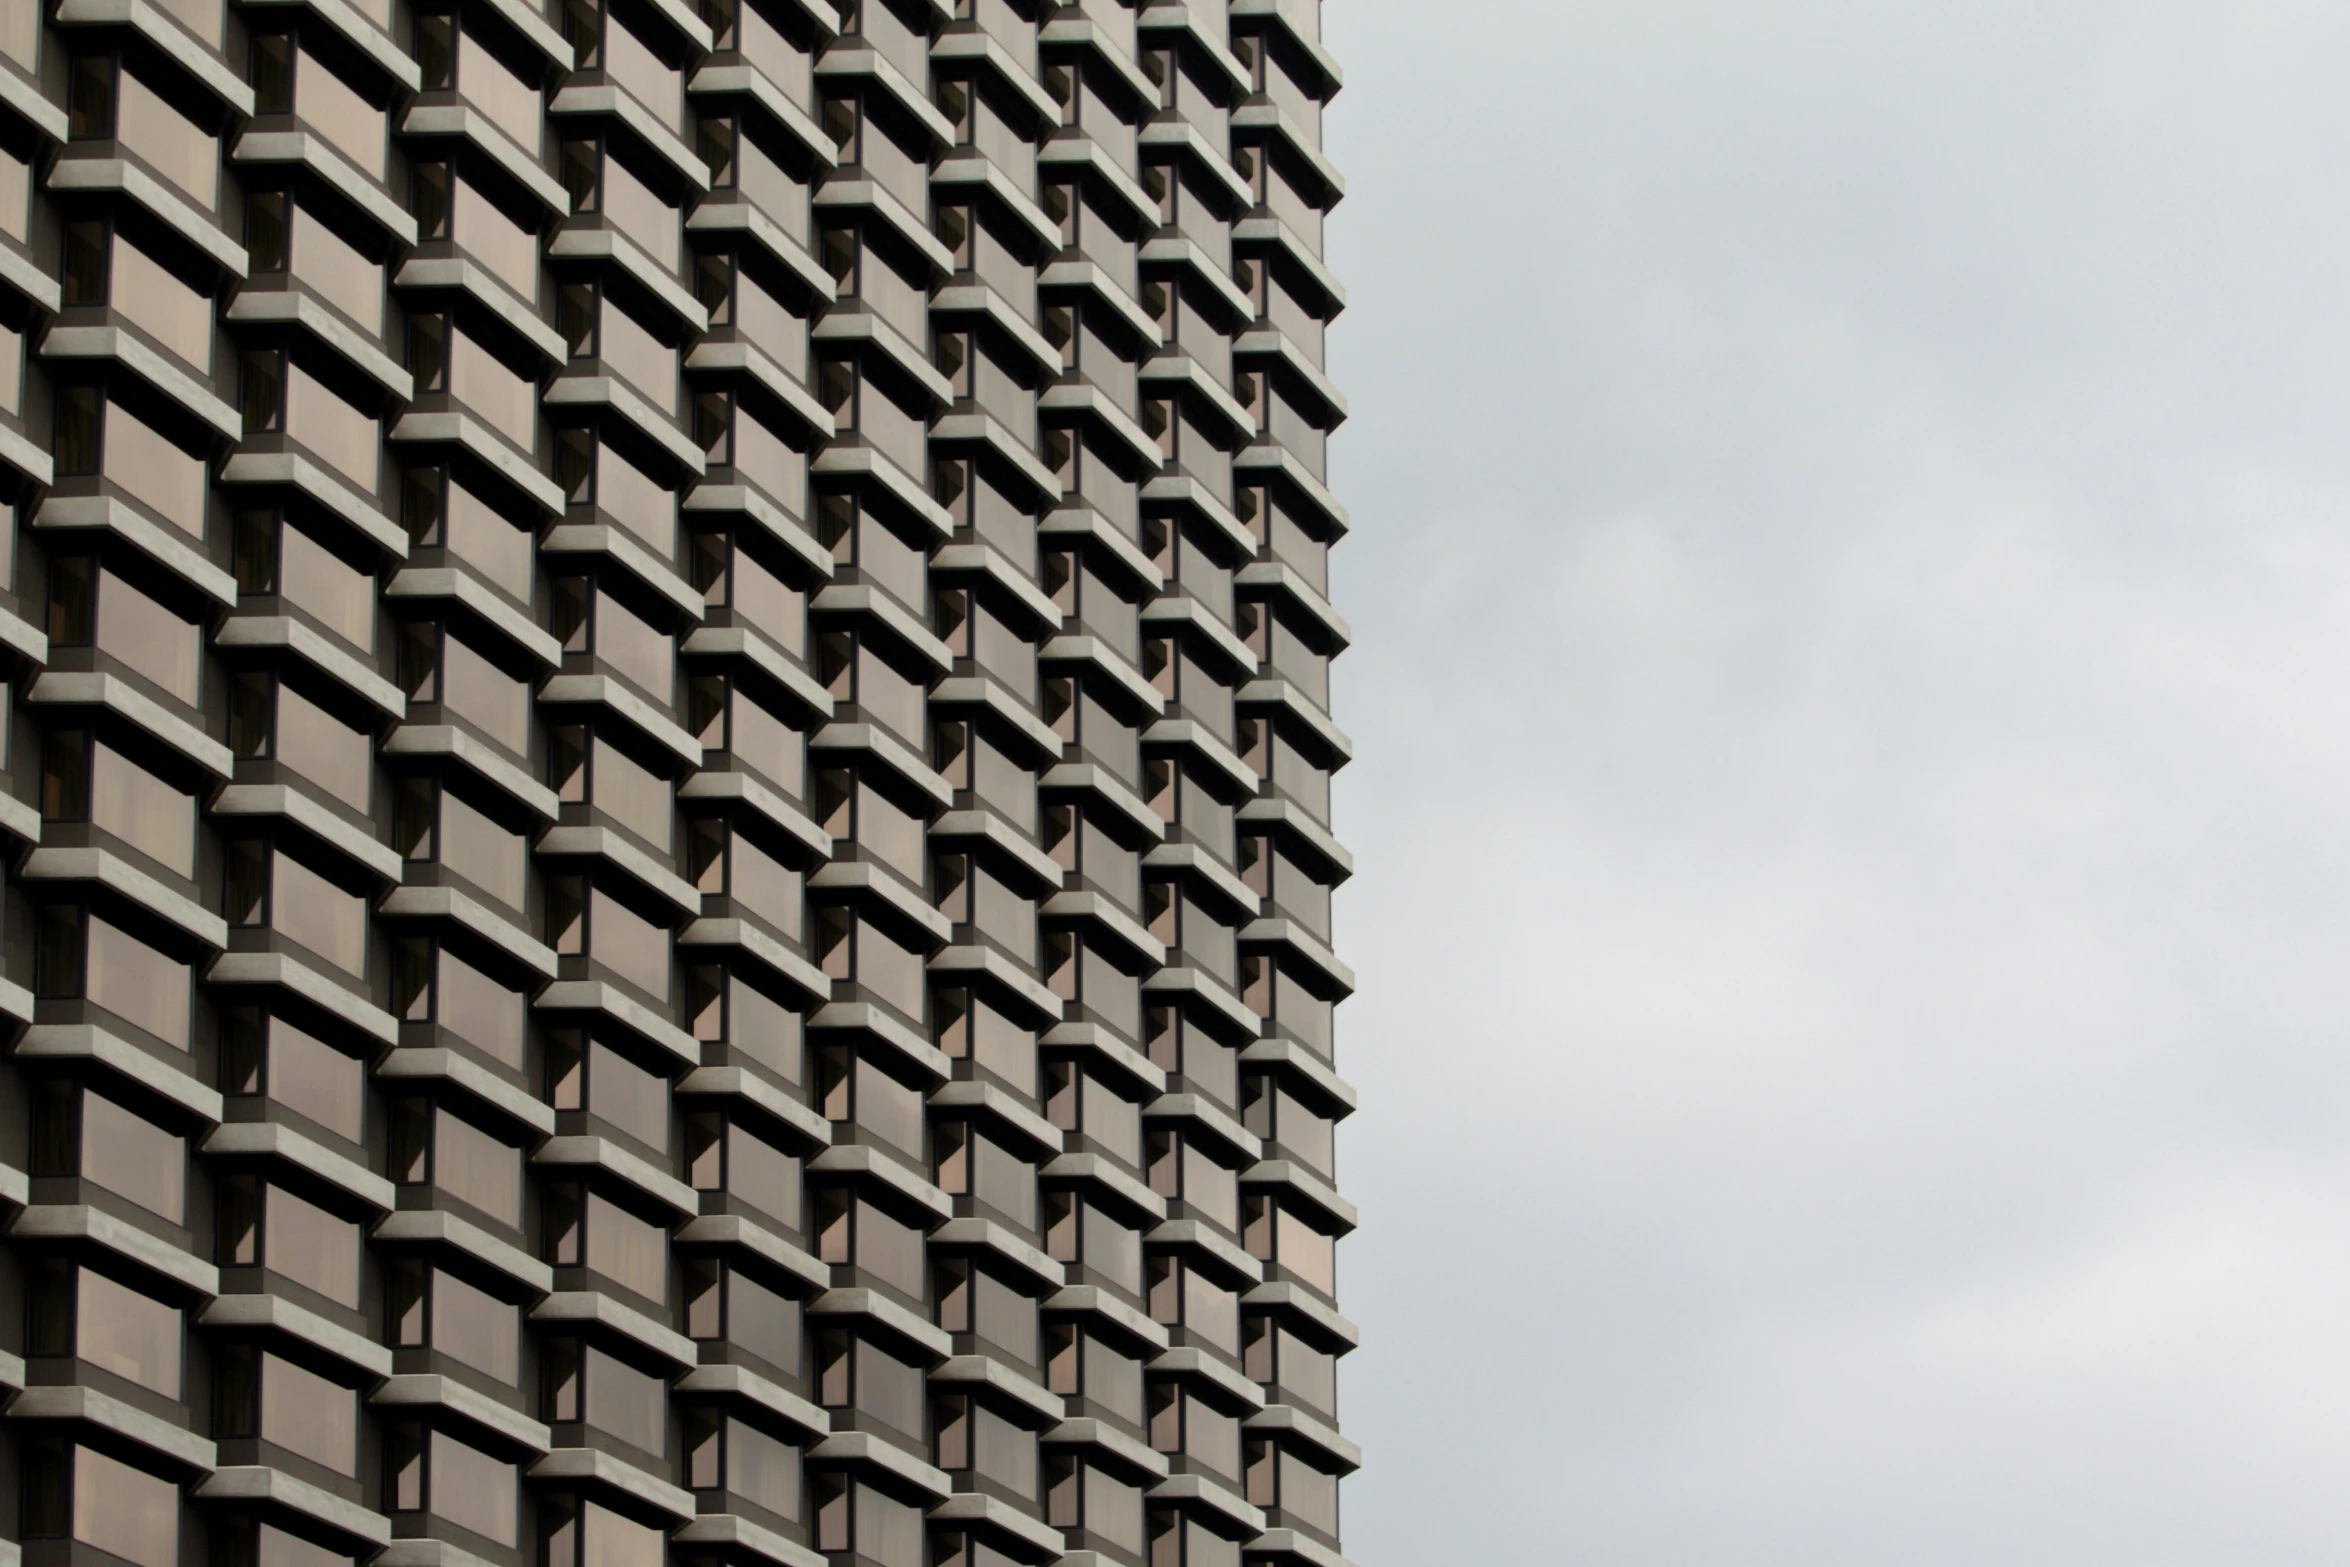 an upward view of a very tall building